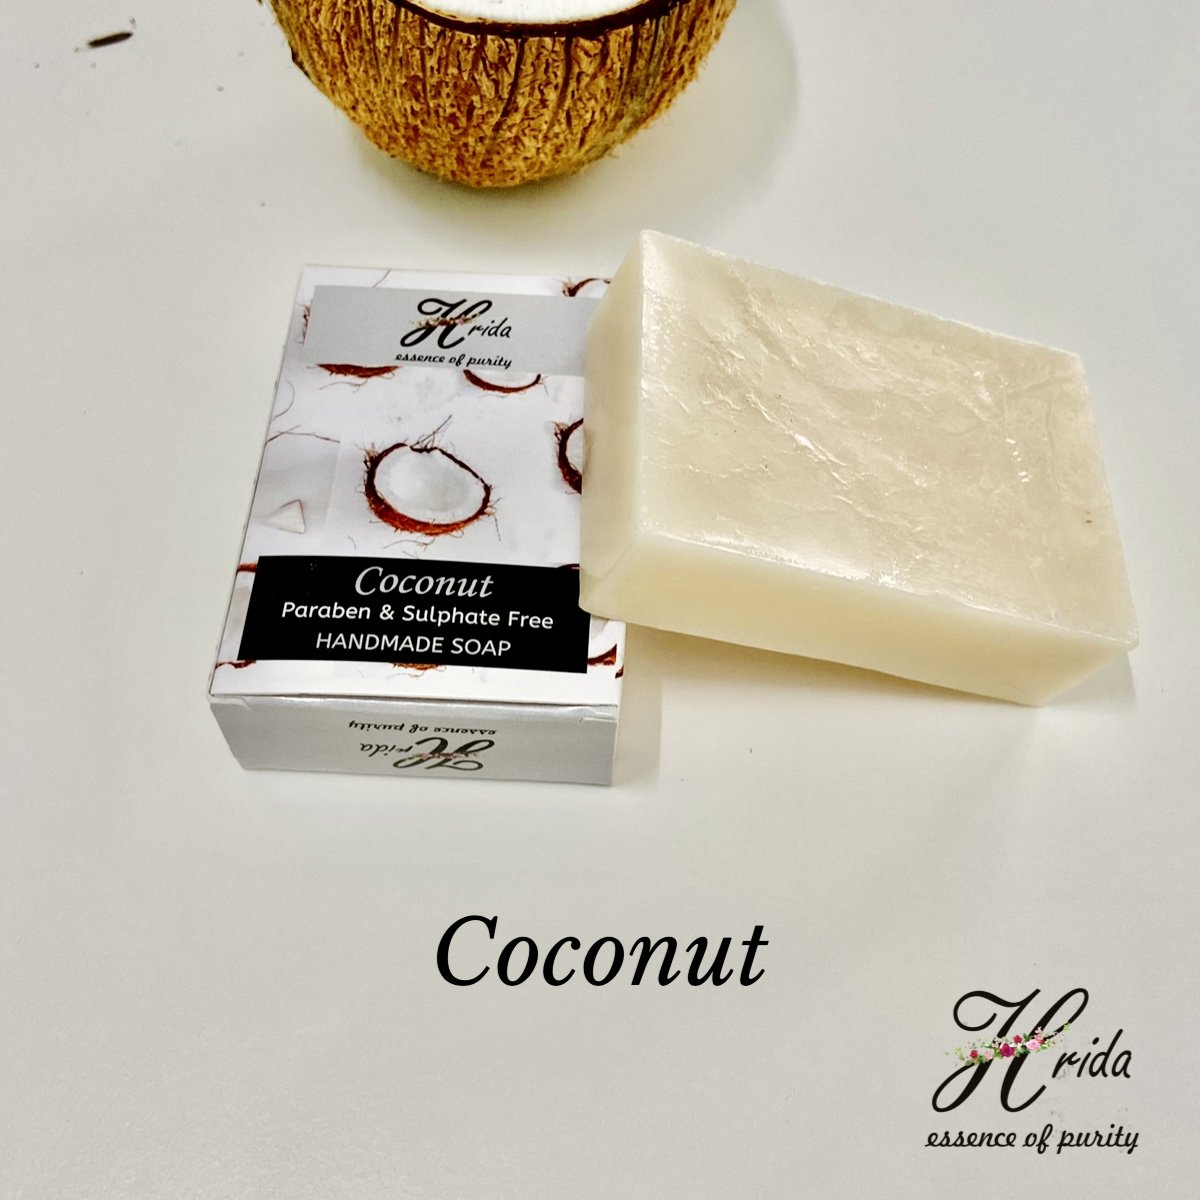 Hrida Coconut Handmade Soap - hfnl!fe